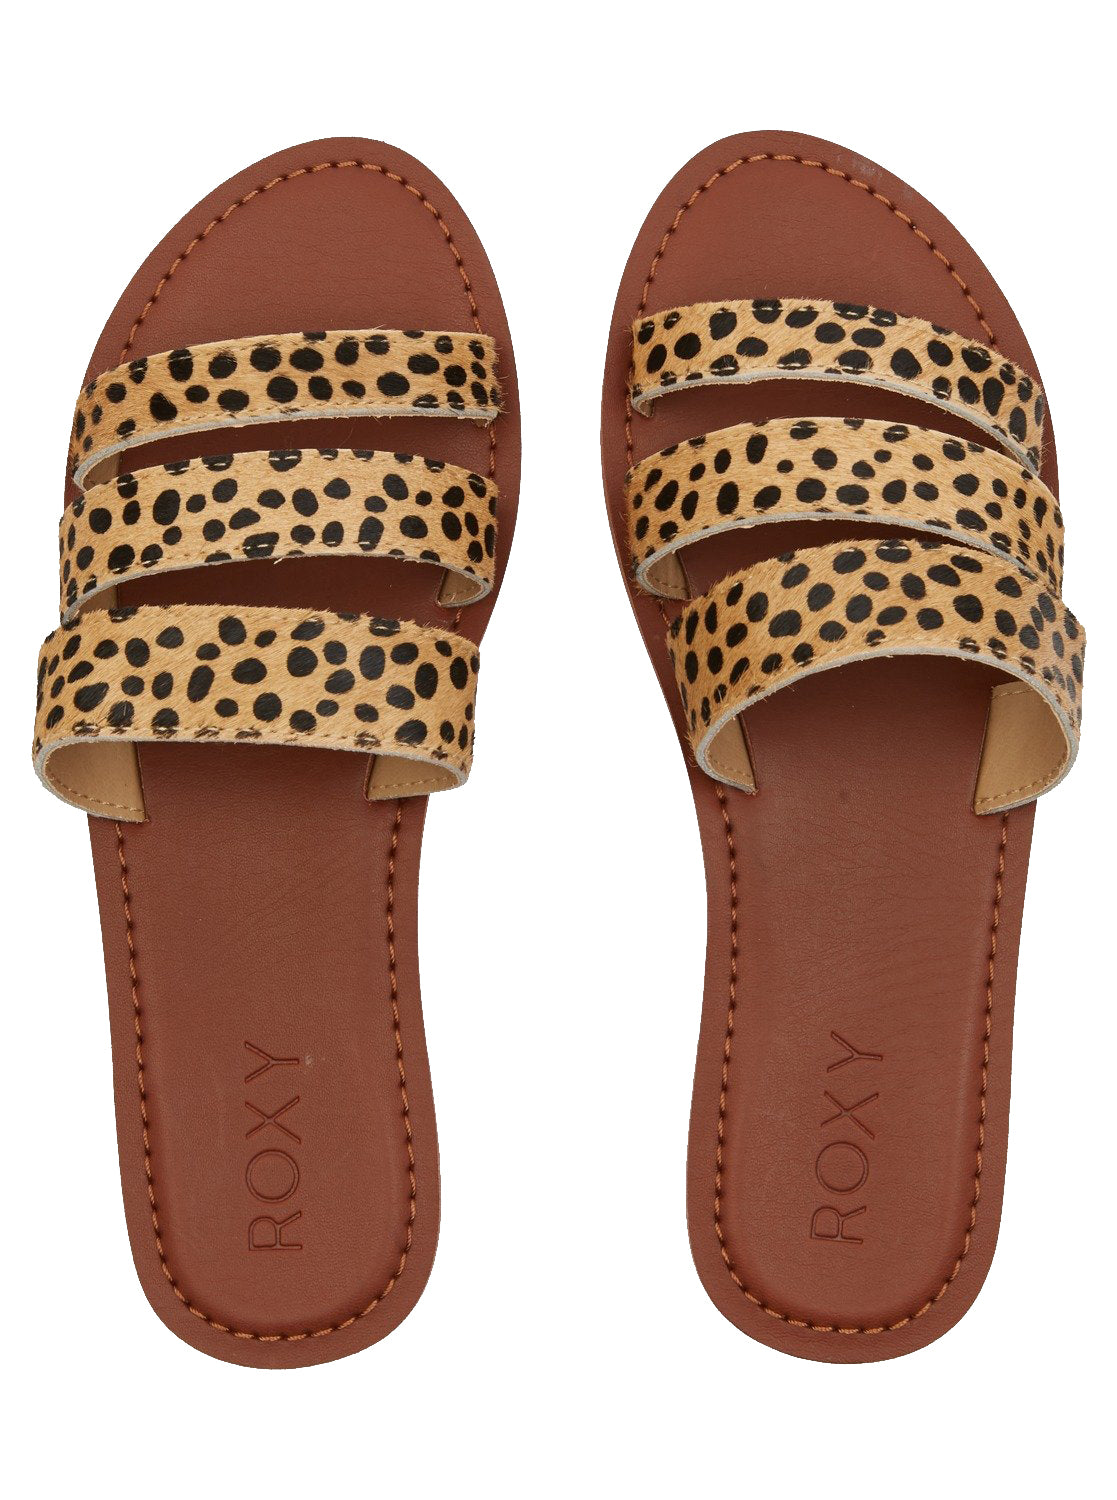 Roxy Wyld Rose 2 Womens Sandal CHE-Cheetah Print 7